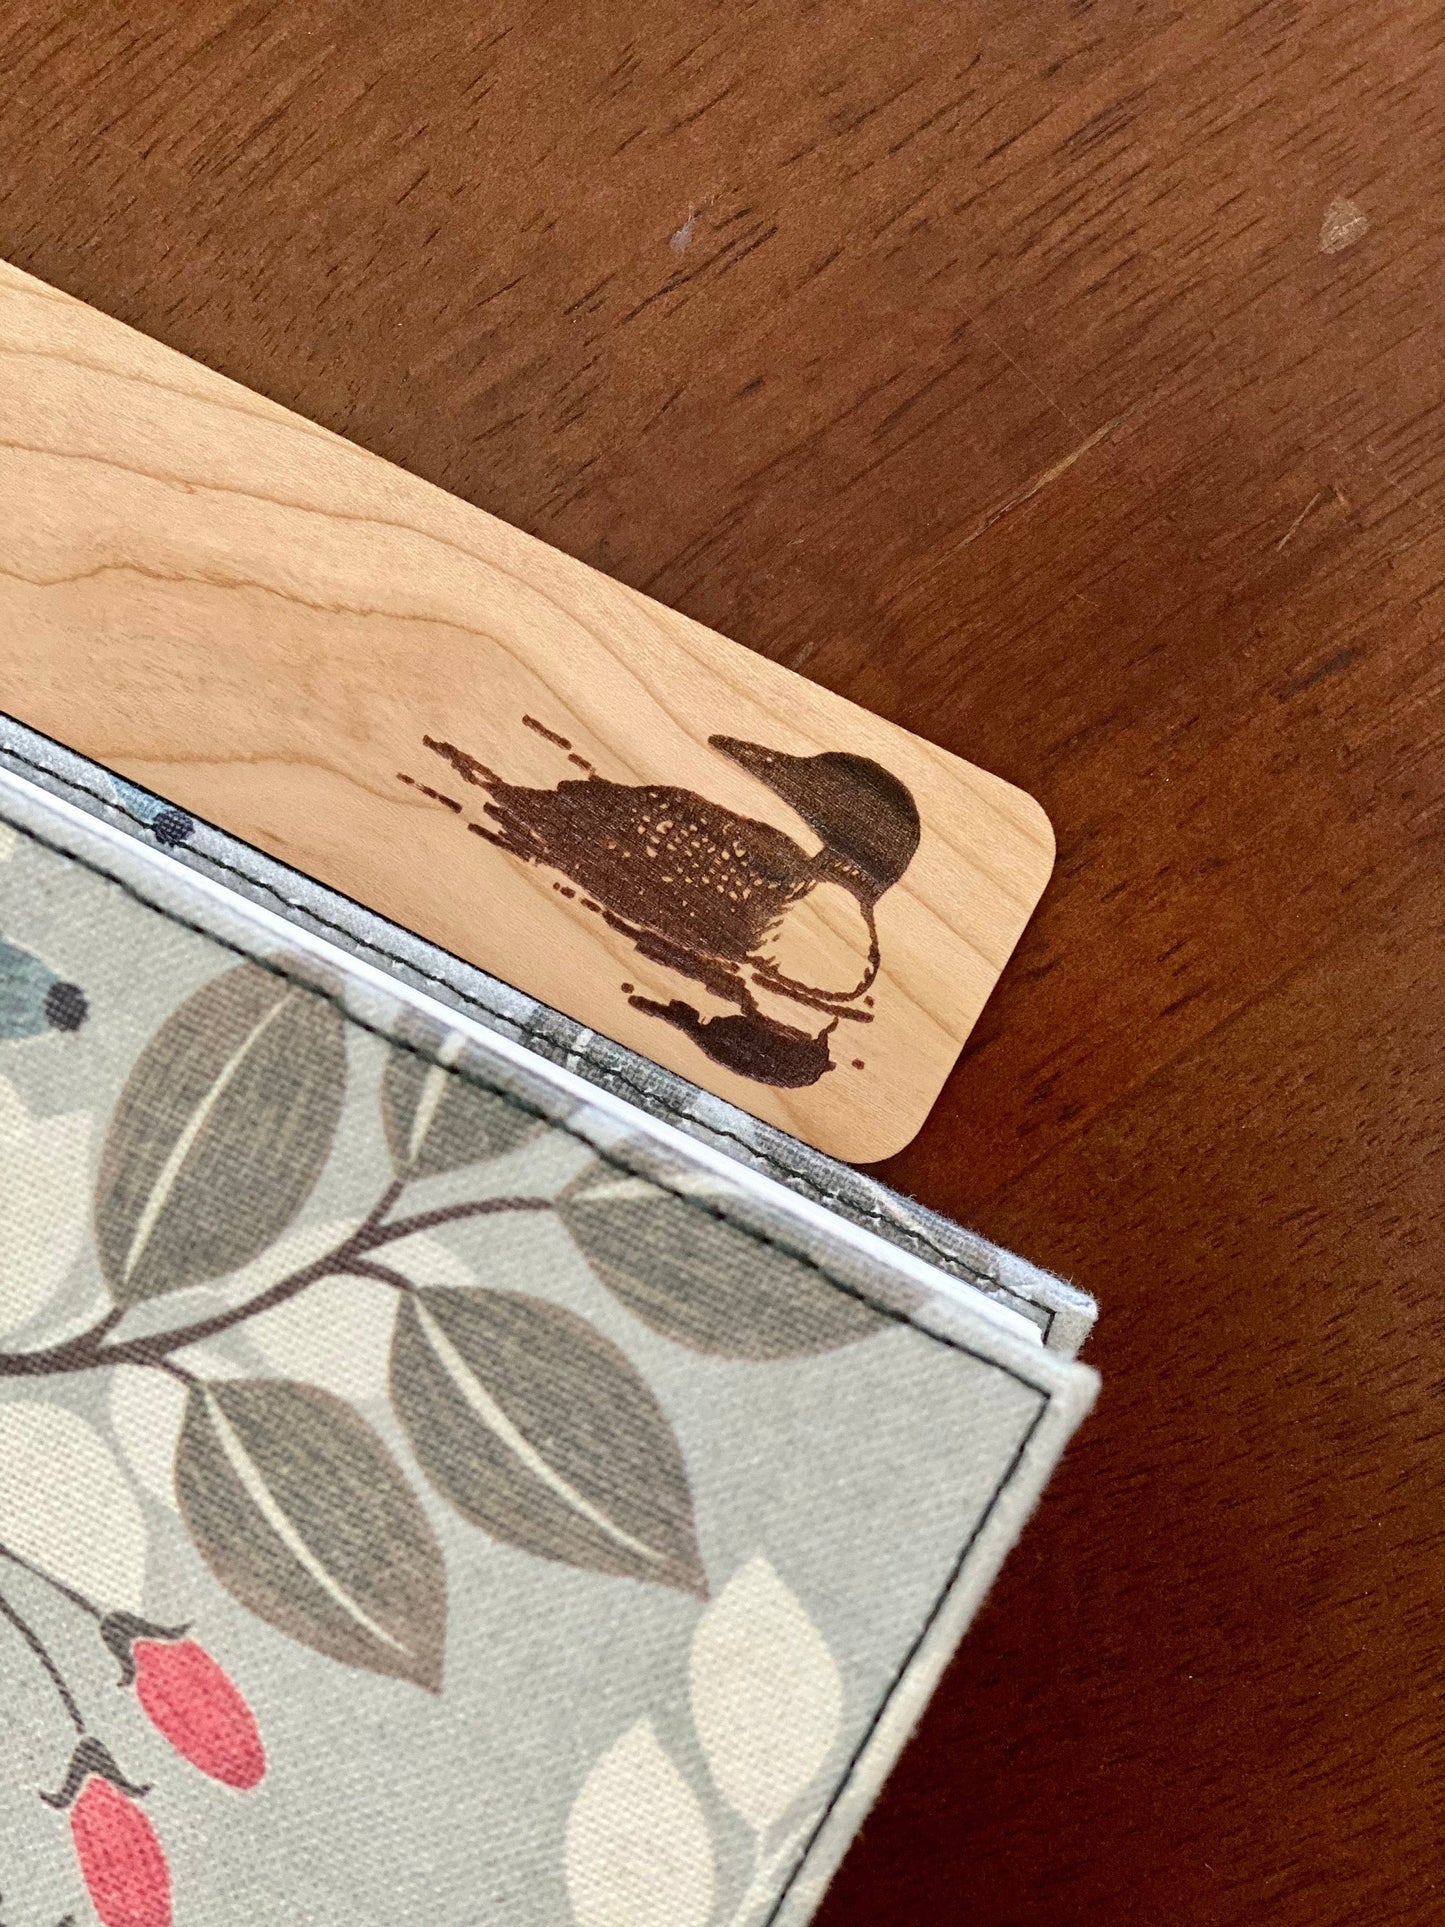 Loon Engraved Wood Bookmark